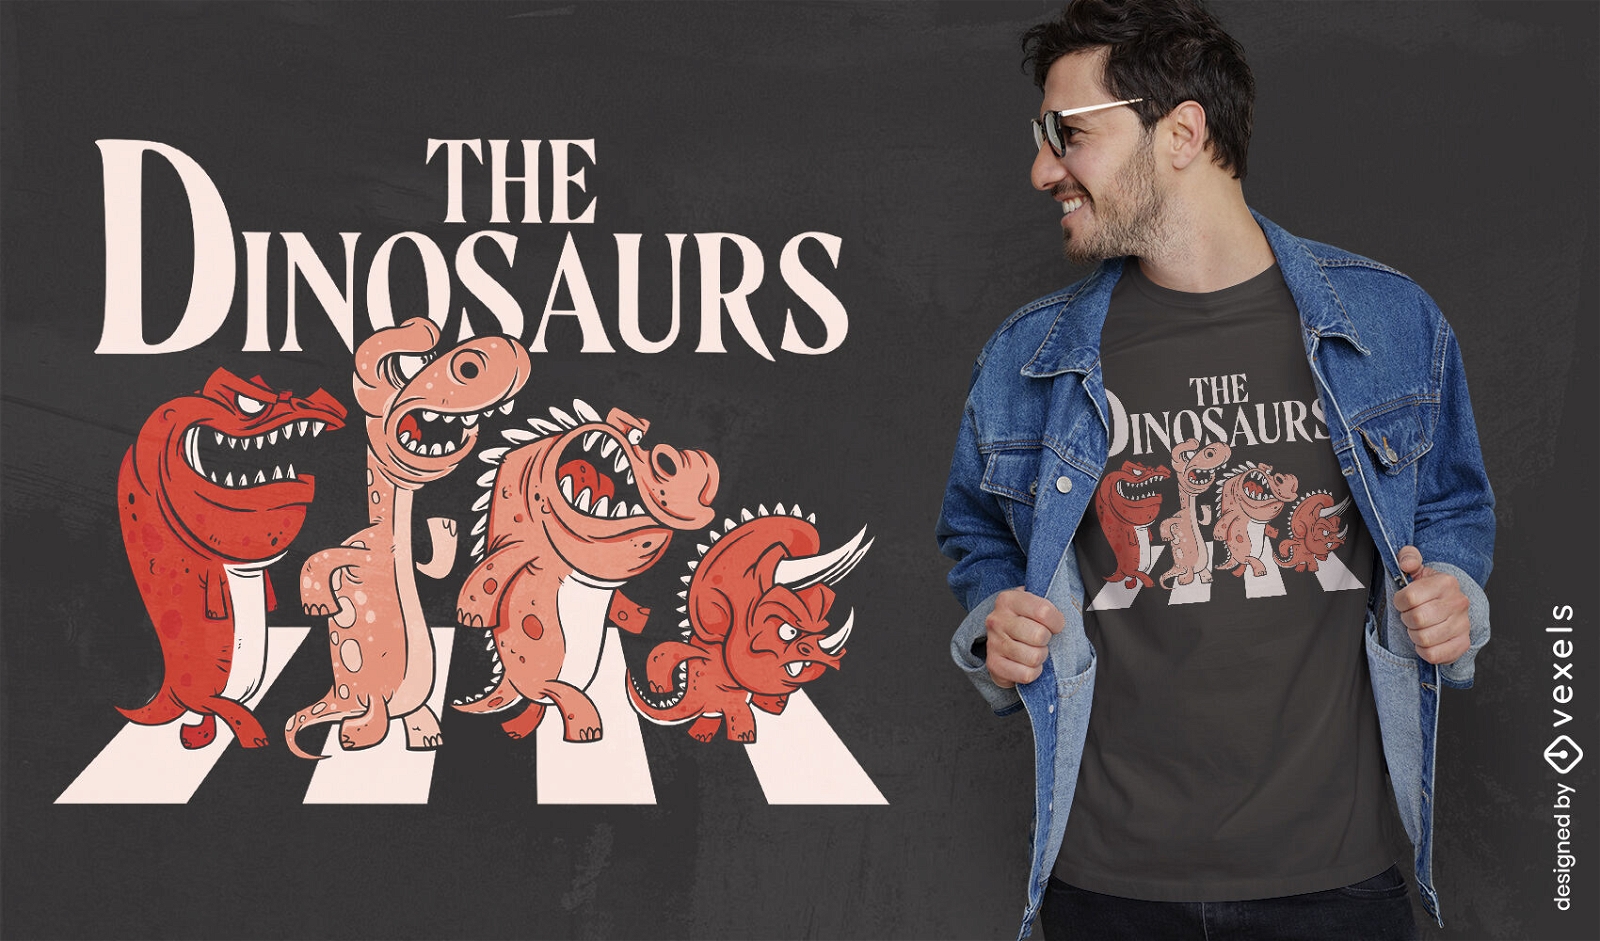 Diseño de camiseta de parodia de Dinosaurs Abbey Road